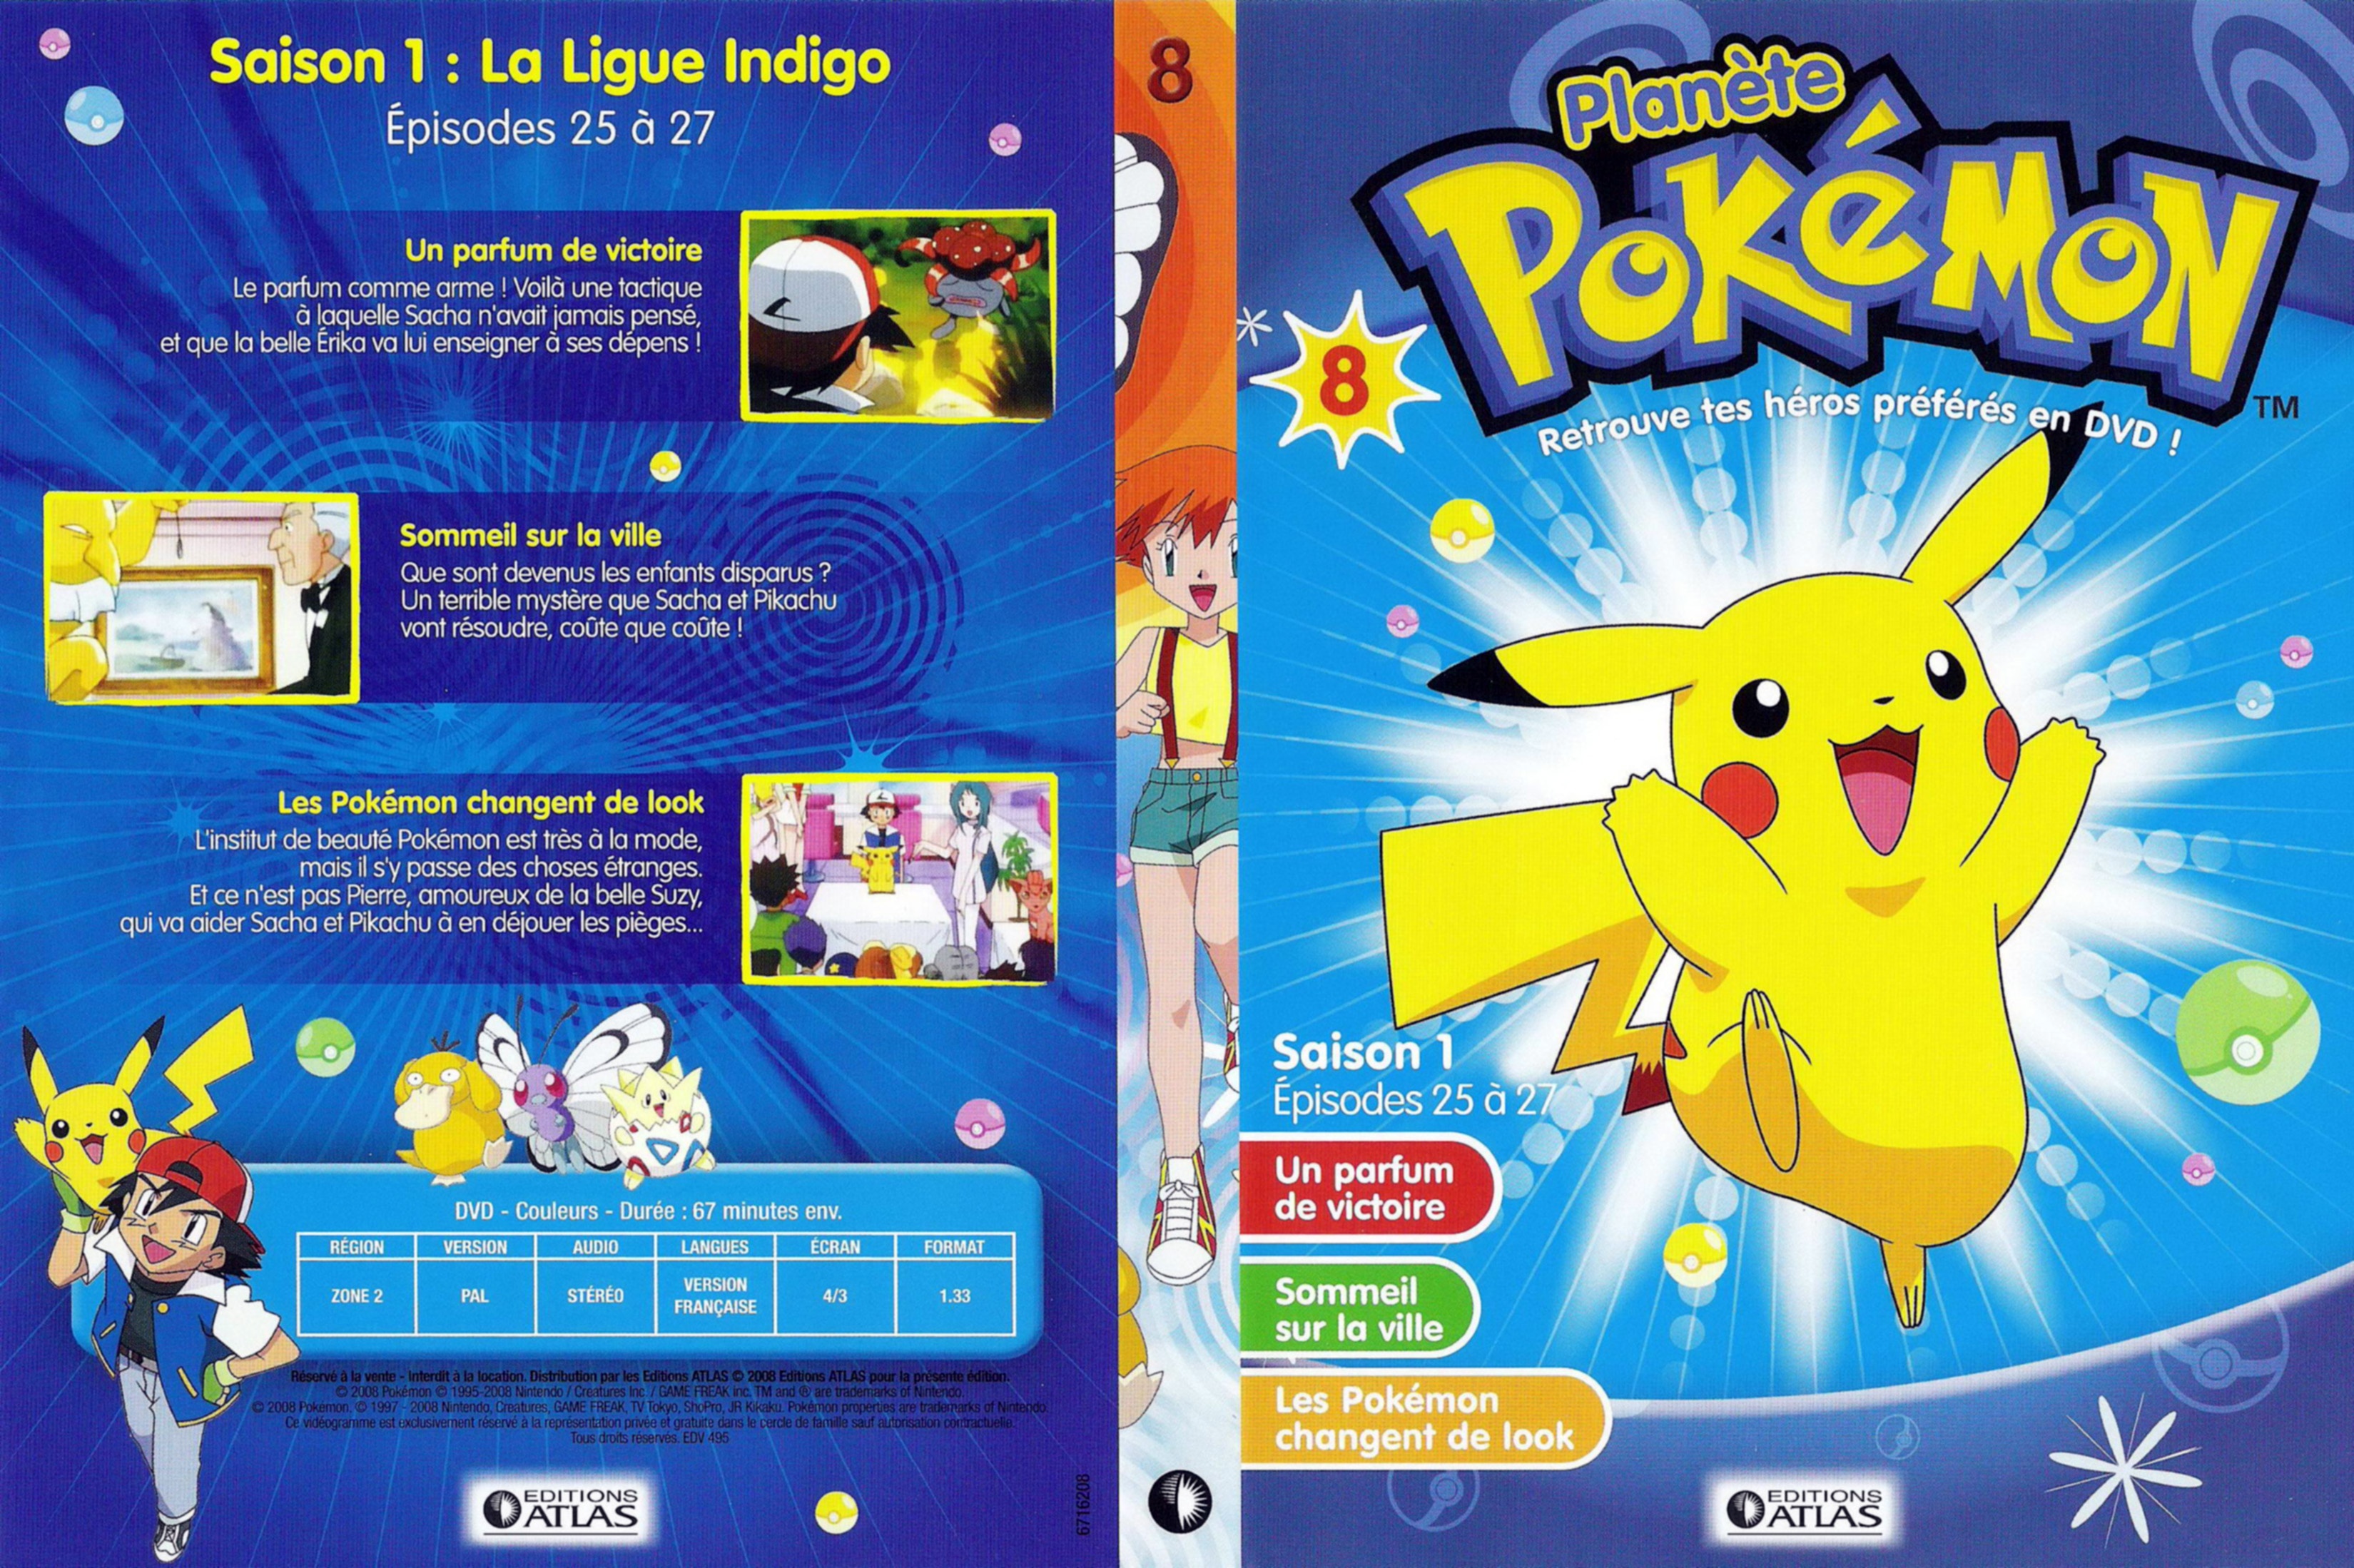 Jaquette DVD Plenete Pokemon vol 08